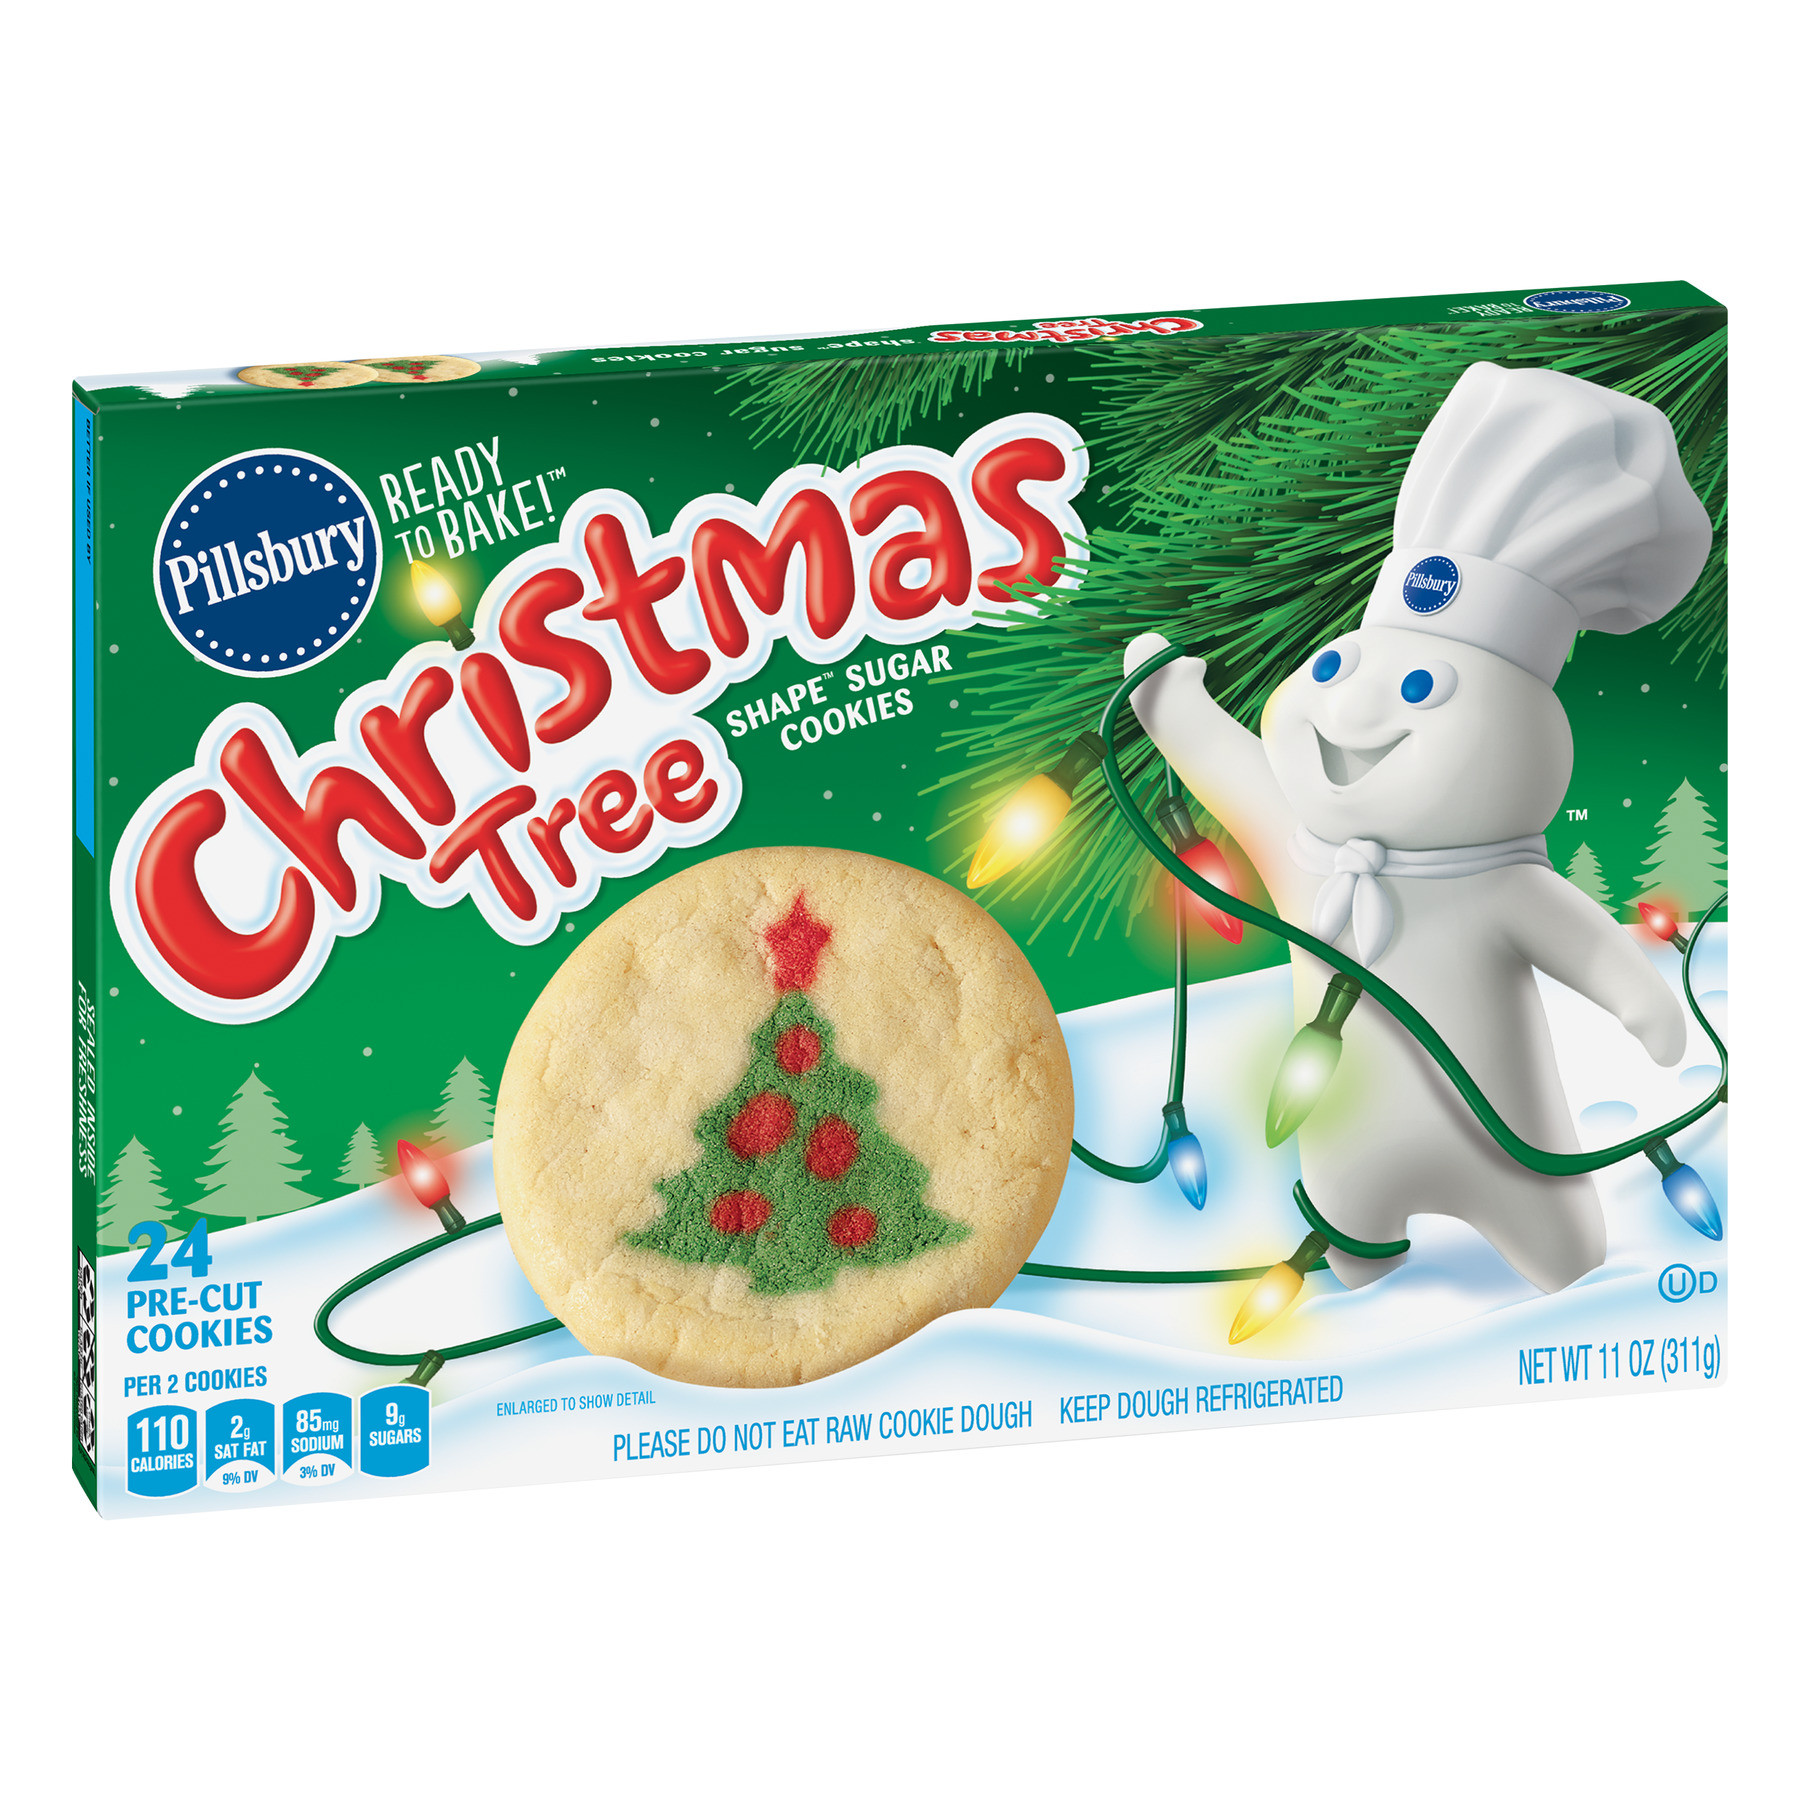 Walmart Christmas Cookies
 Pillsbury Ready to Bake Christmas Tree Shape Sugar